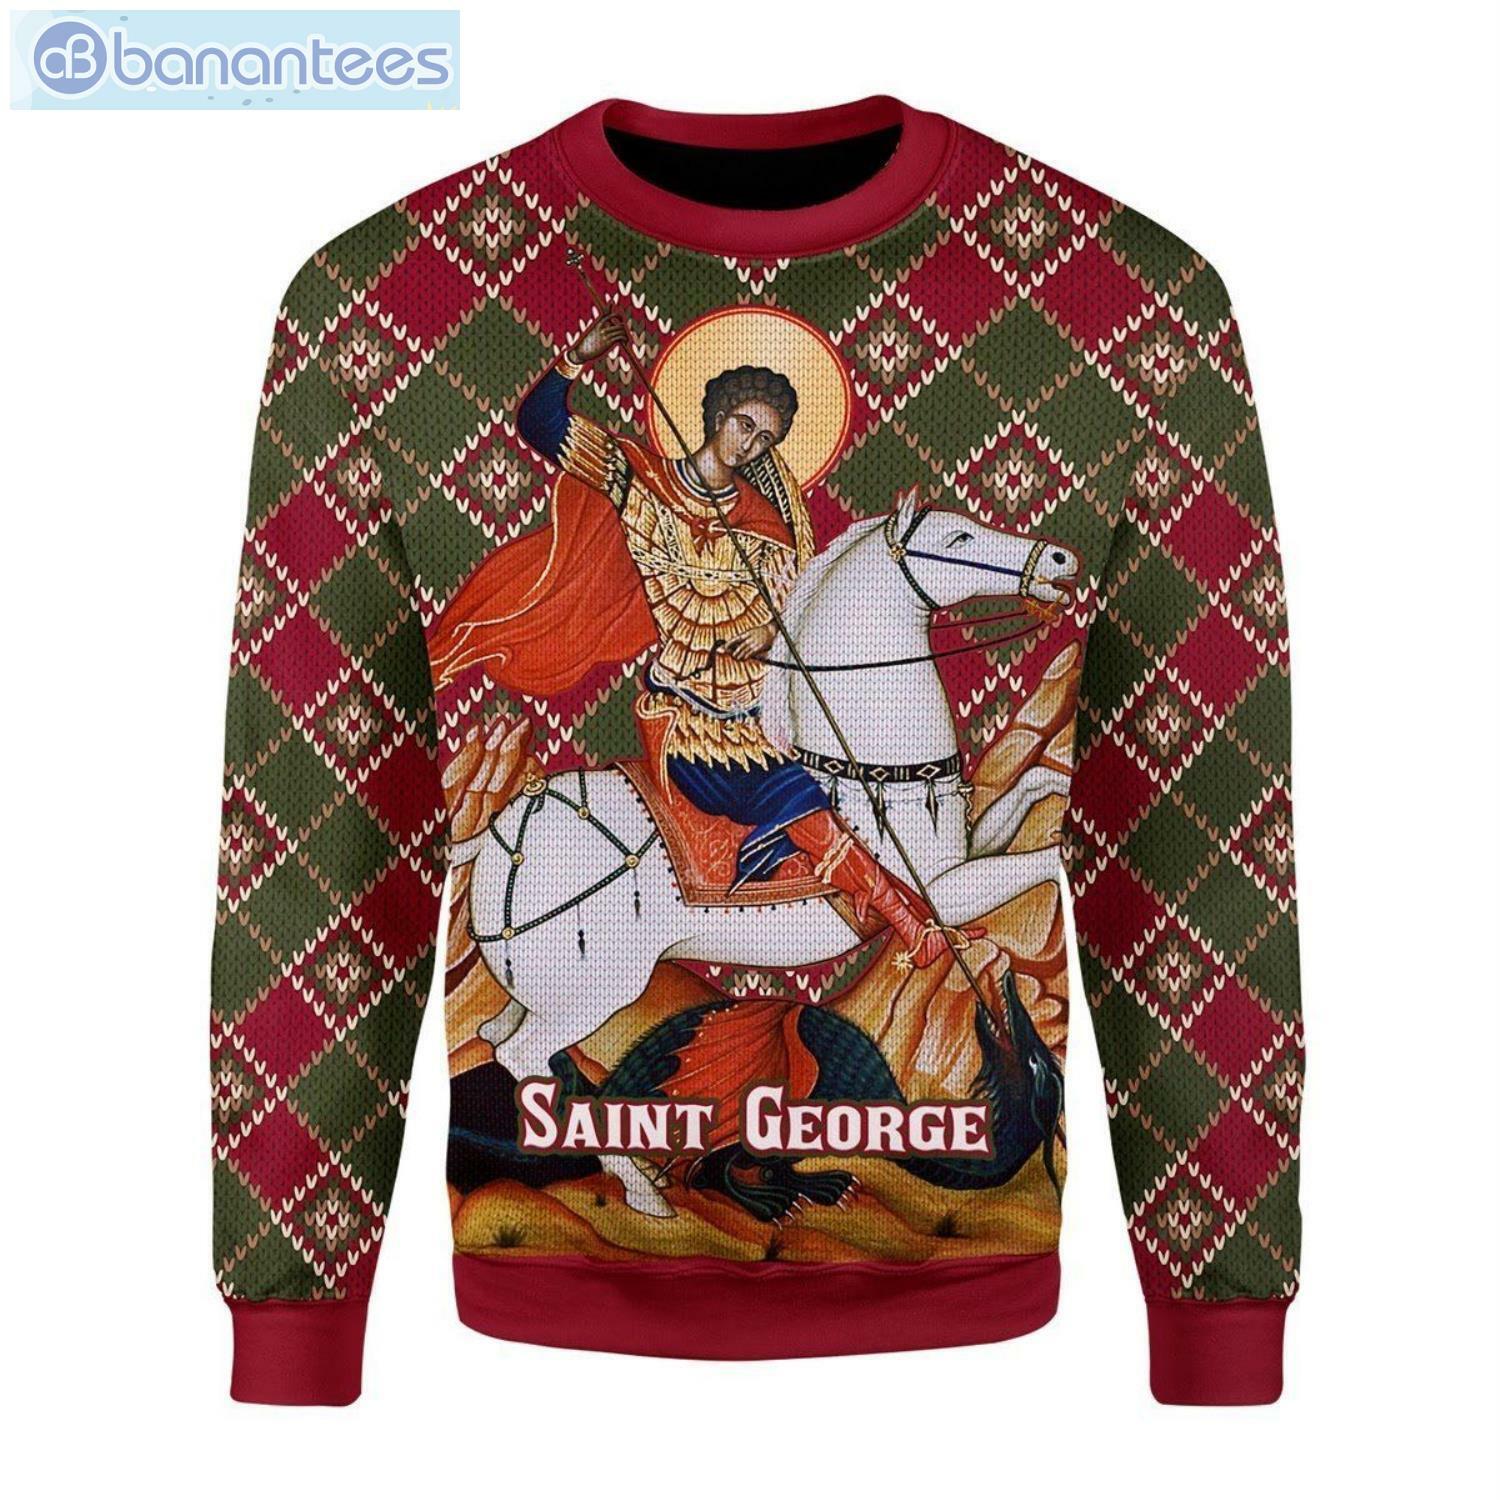 Saint George Ugly Christmas Sweater Product Photo 1 Product photo 1